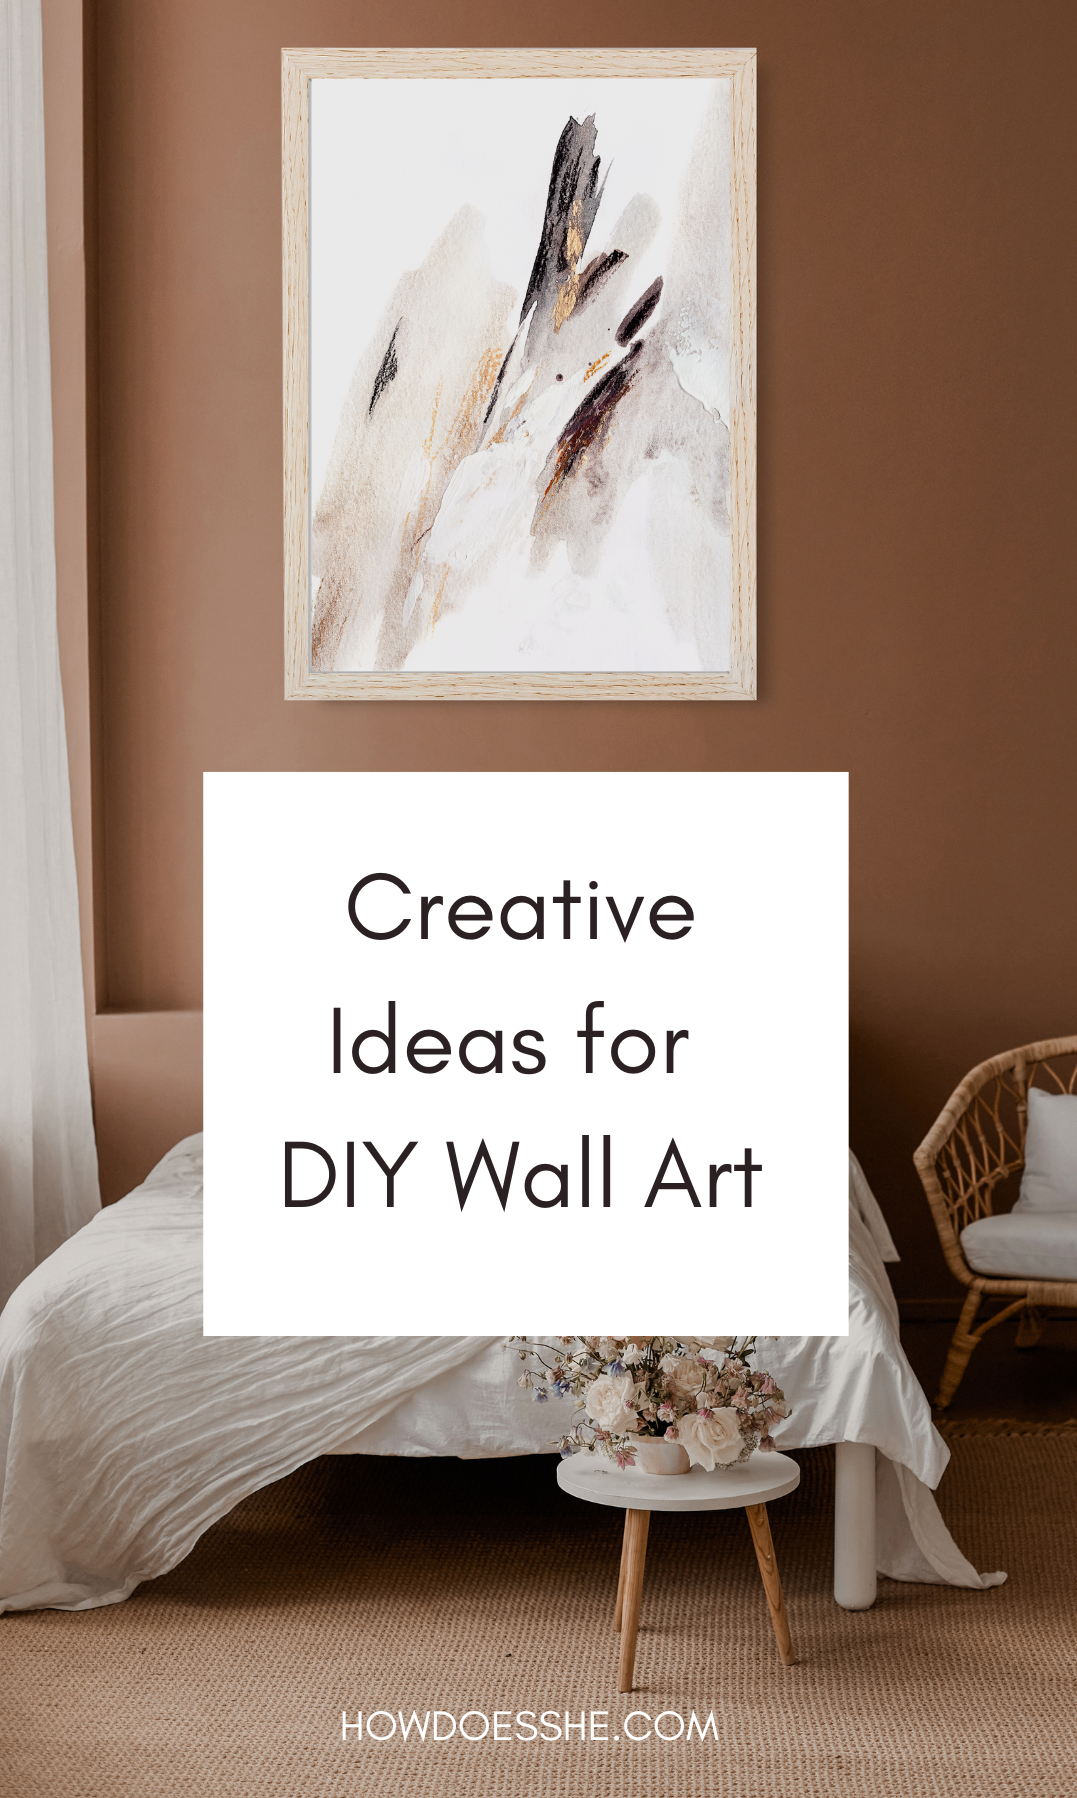 Artistic Concepts for DIY Wall Artwork | Digital Noch